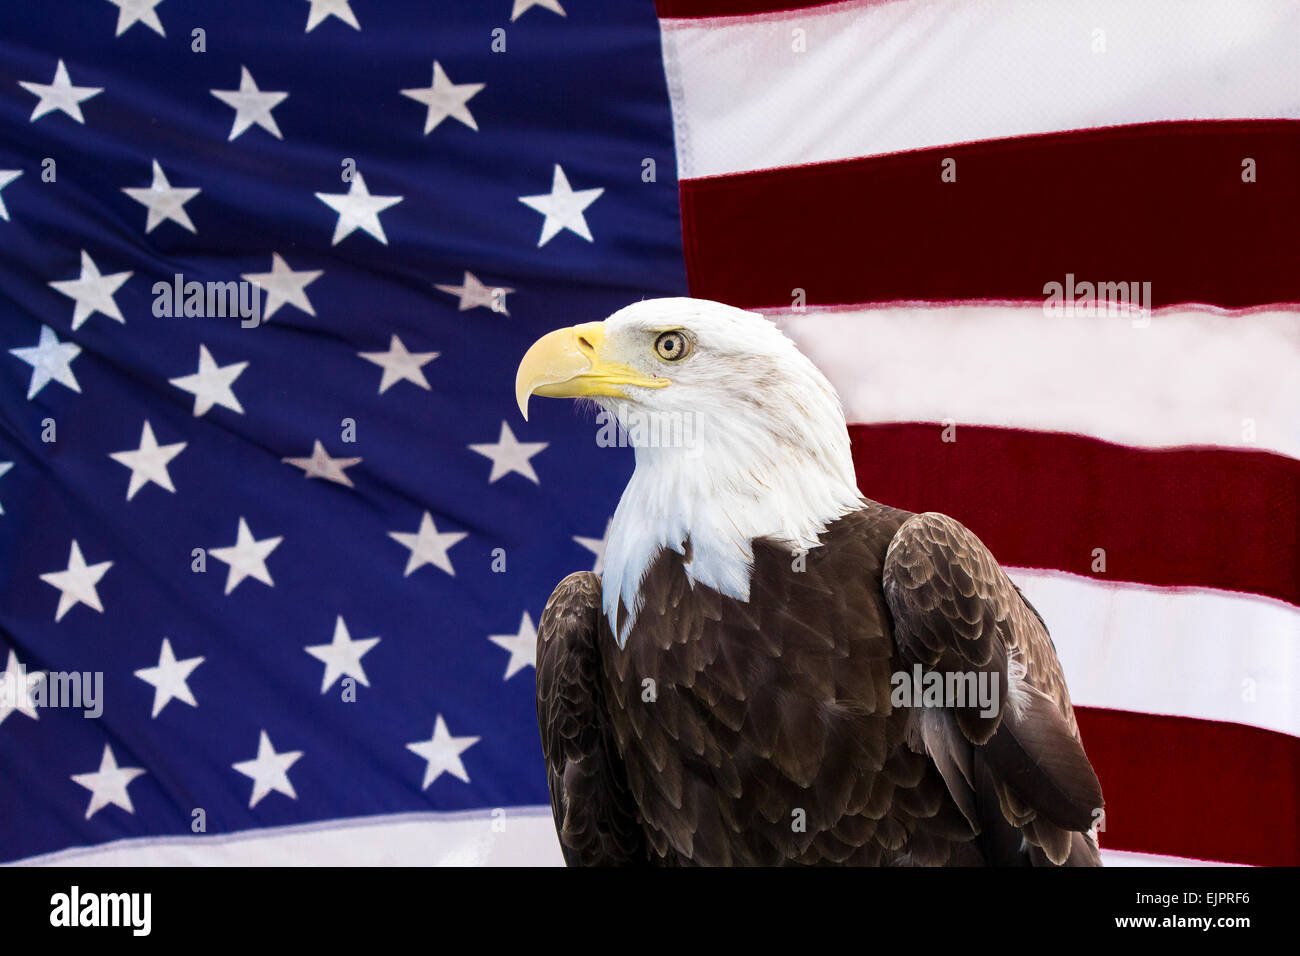 American Flag American Eagle USA pride honor liberty America peace love people Stock Photo